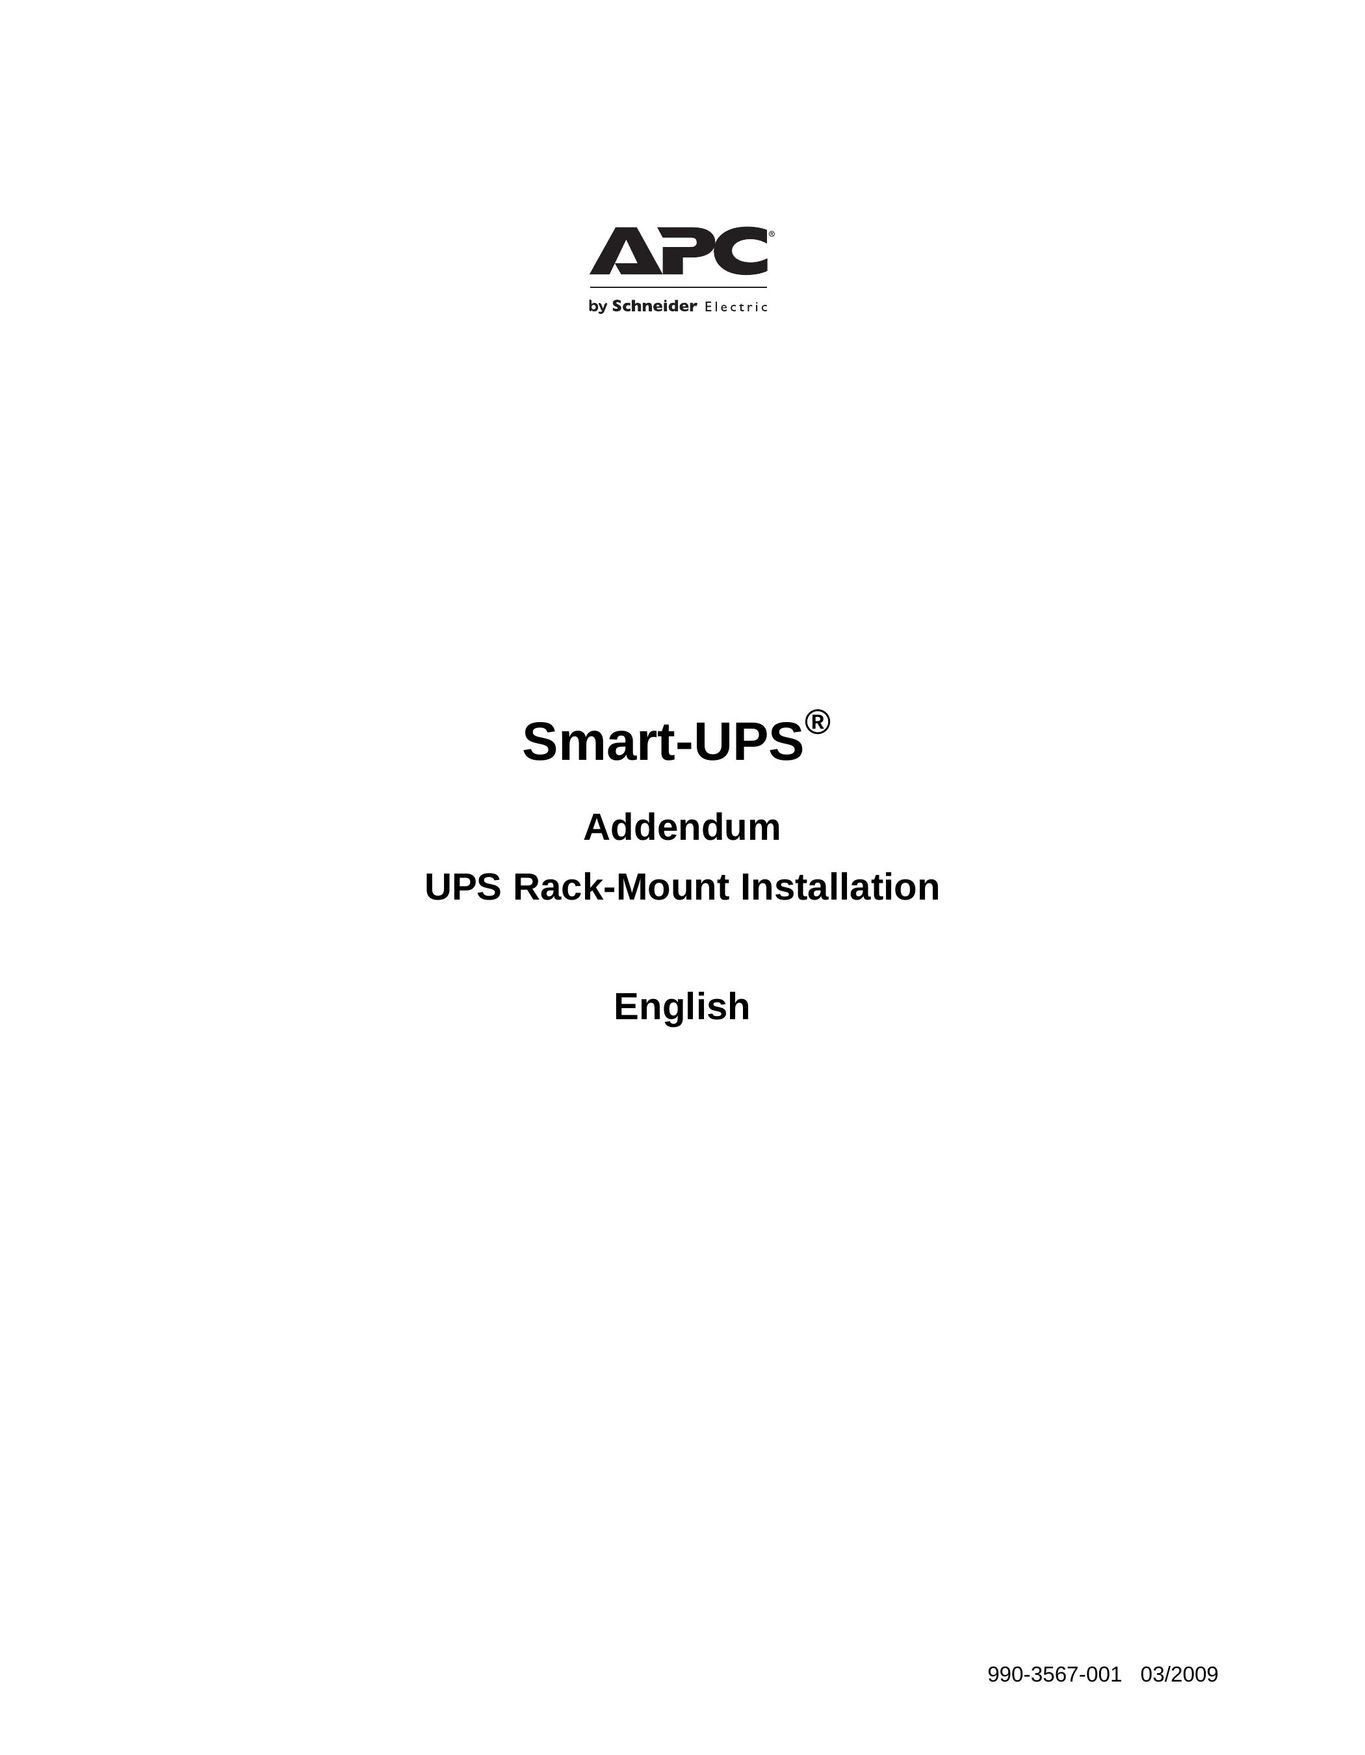 APC 100 V Power Supply User Manual